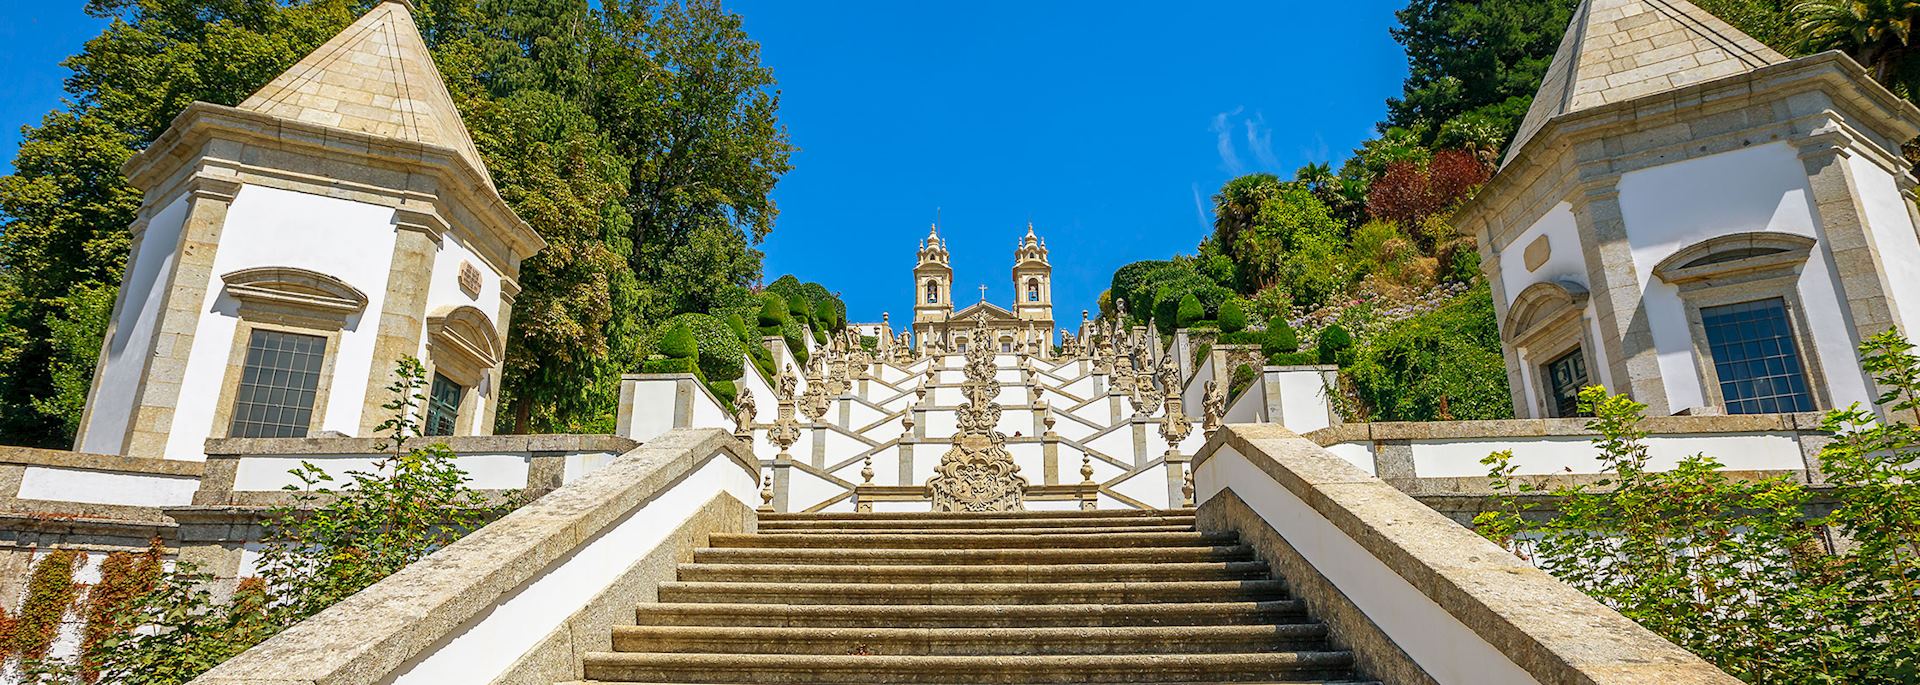 Staircase of Bom Jesus do Monte, Braga